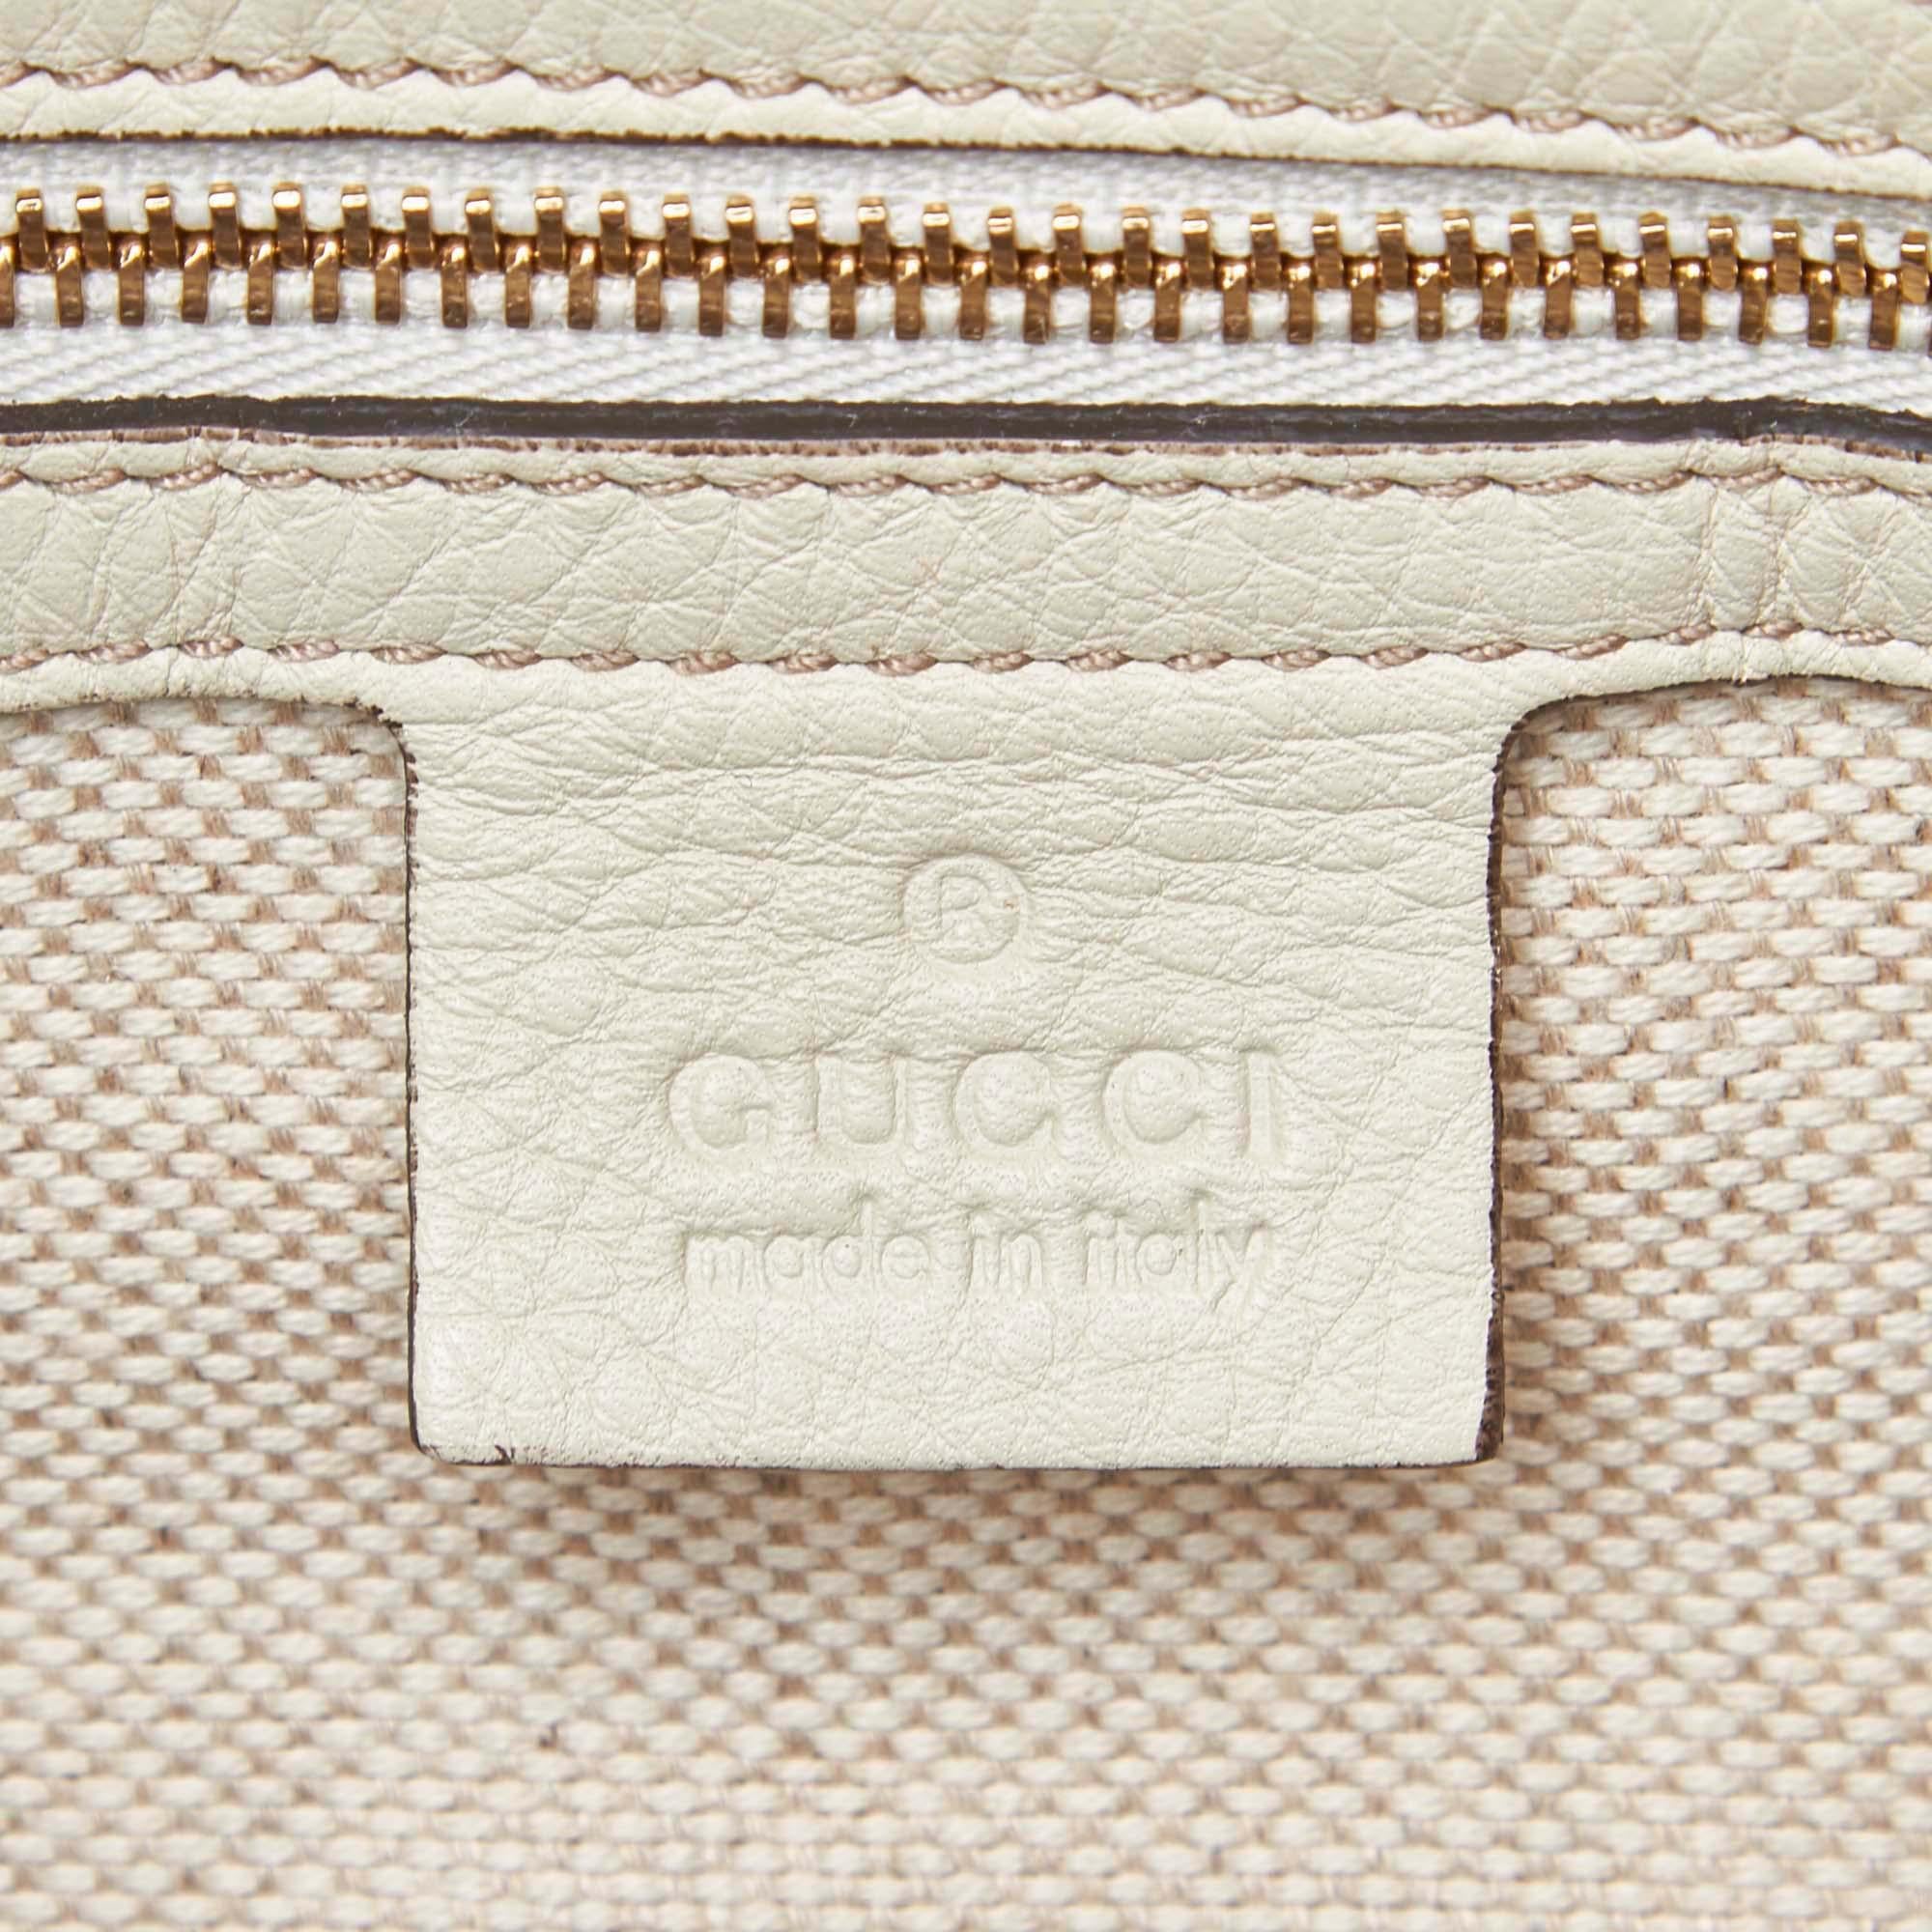 Vintage Authentic Gucci White Leather Soho Handbag Italy w Dust Bag MEDIUM  For Sale 1